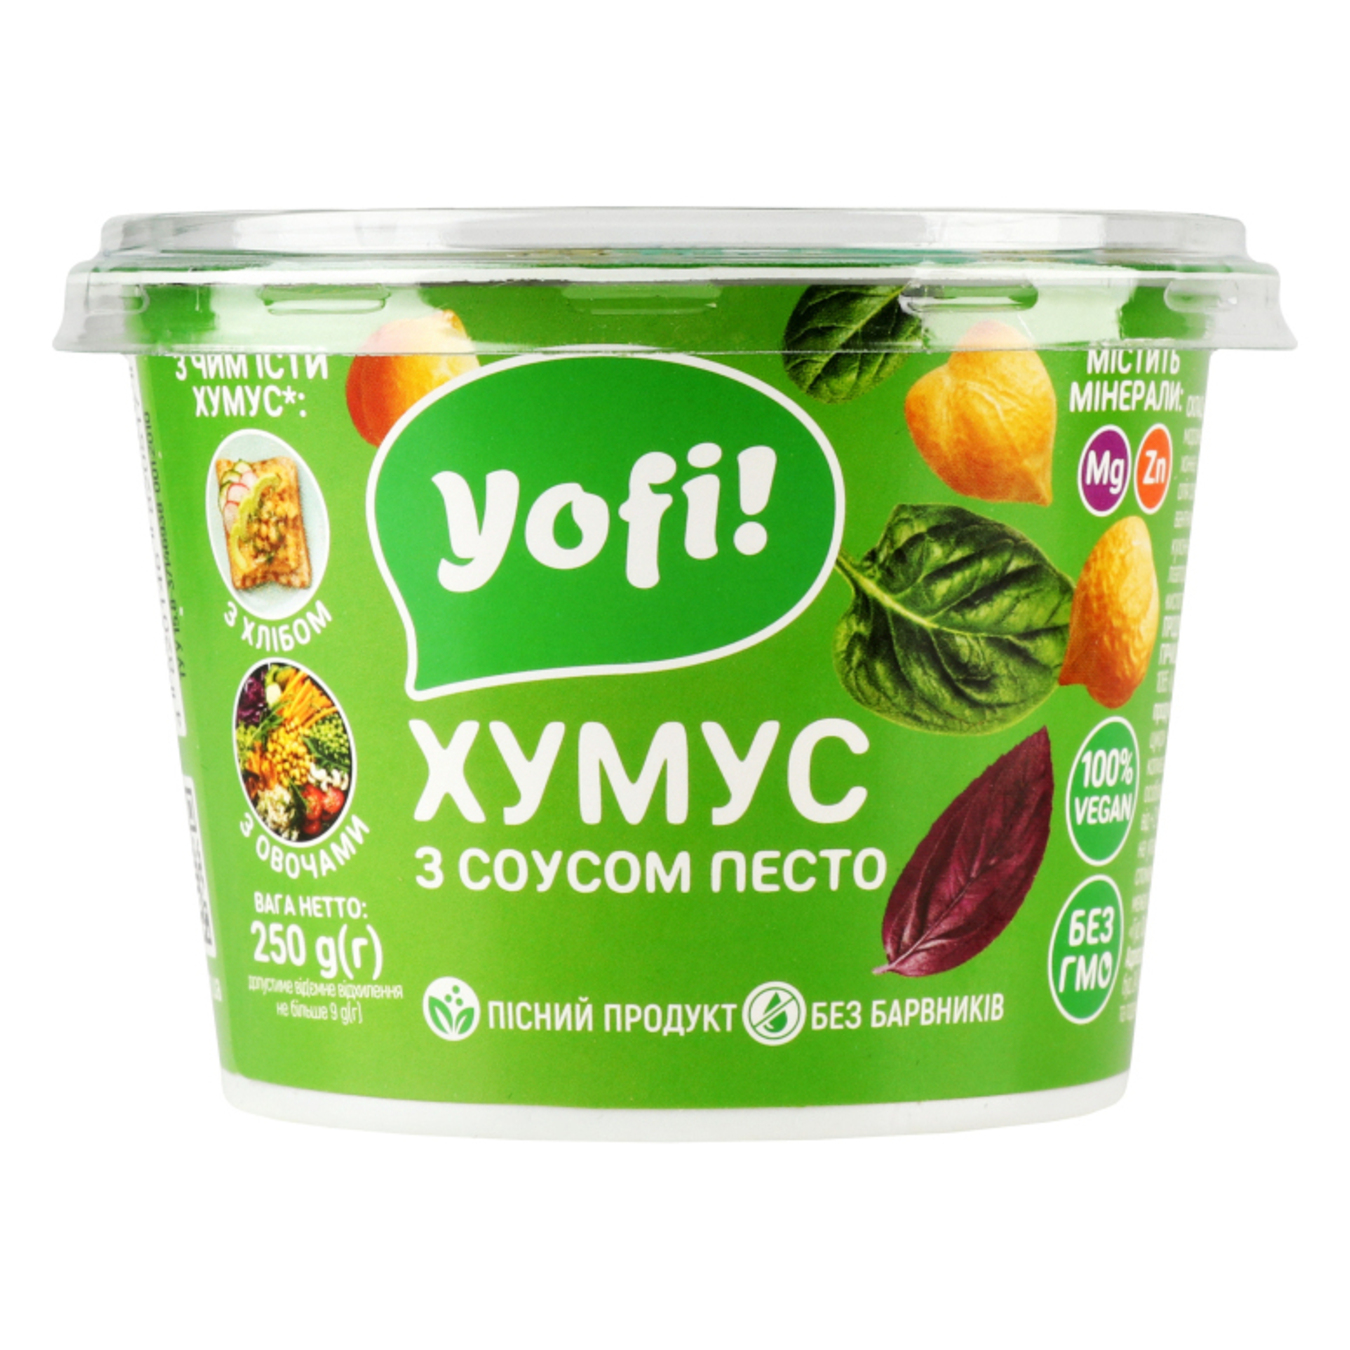 Yofi hummus with pesto sauce 250g